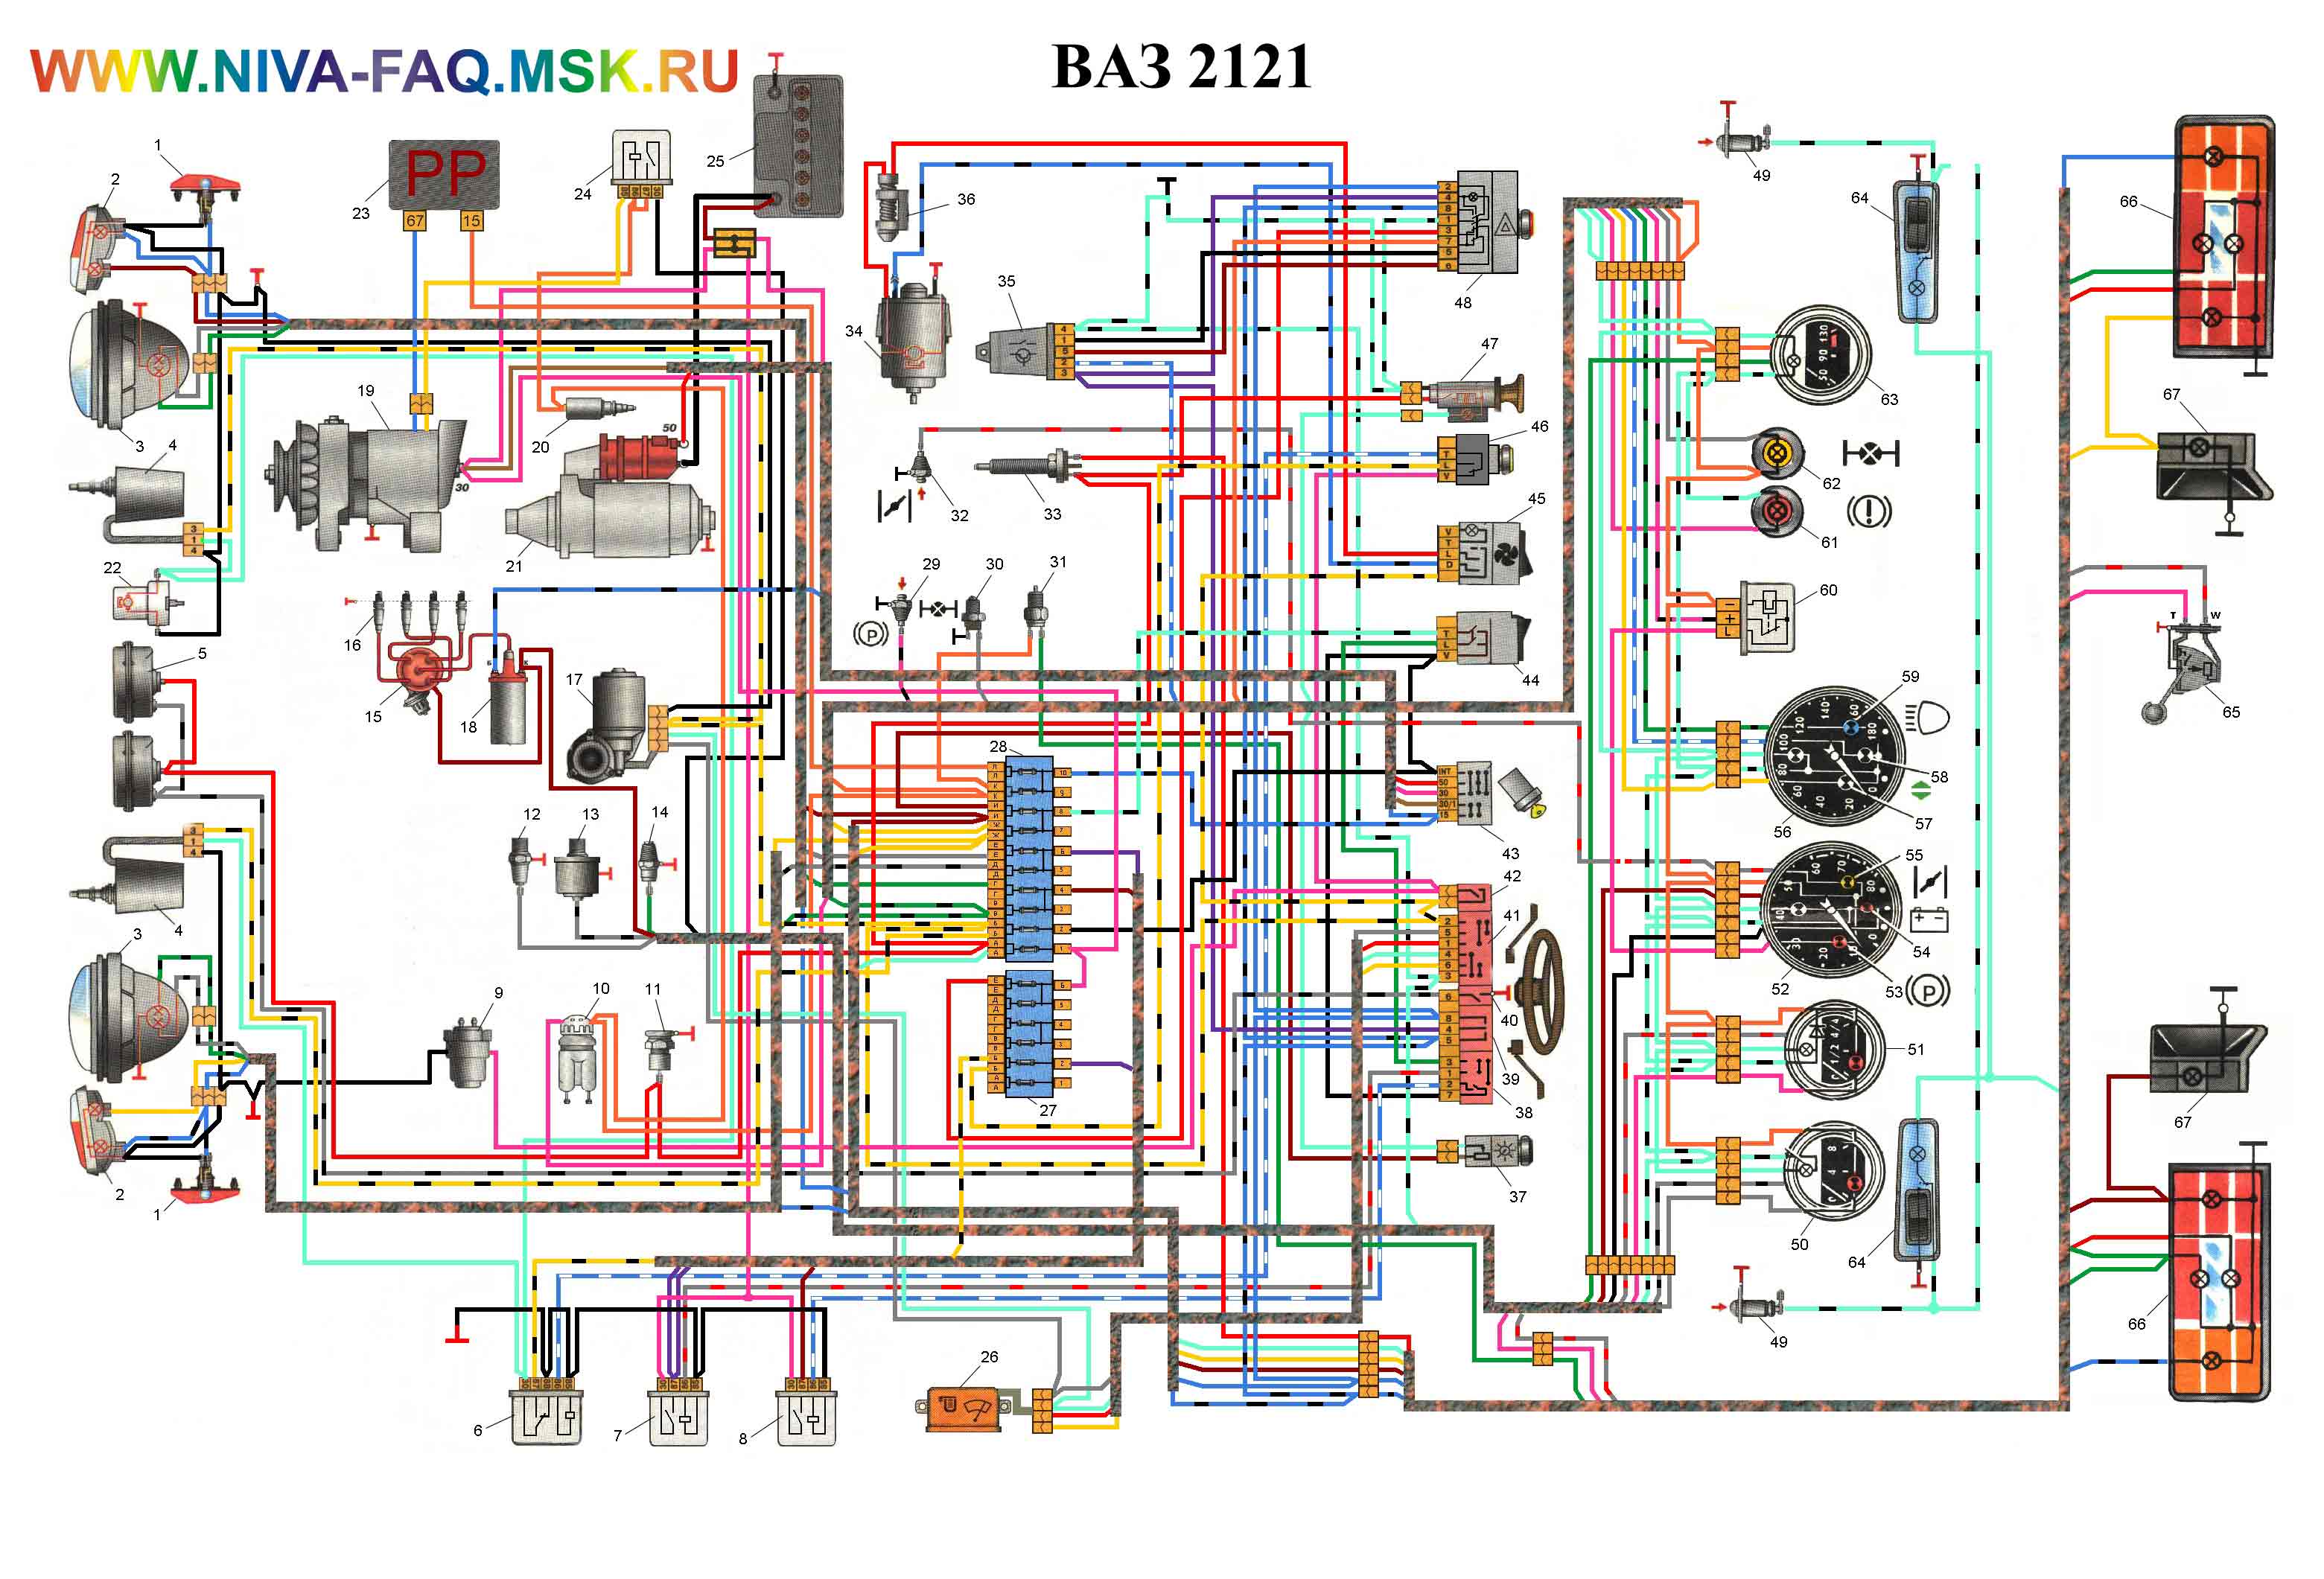 Схема ближний - дальний свет нива 21213 | twokarburators.ru